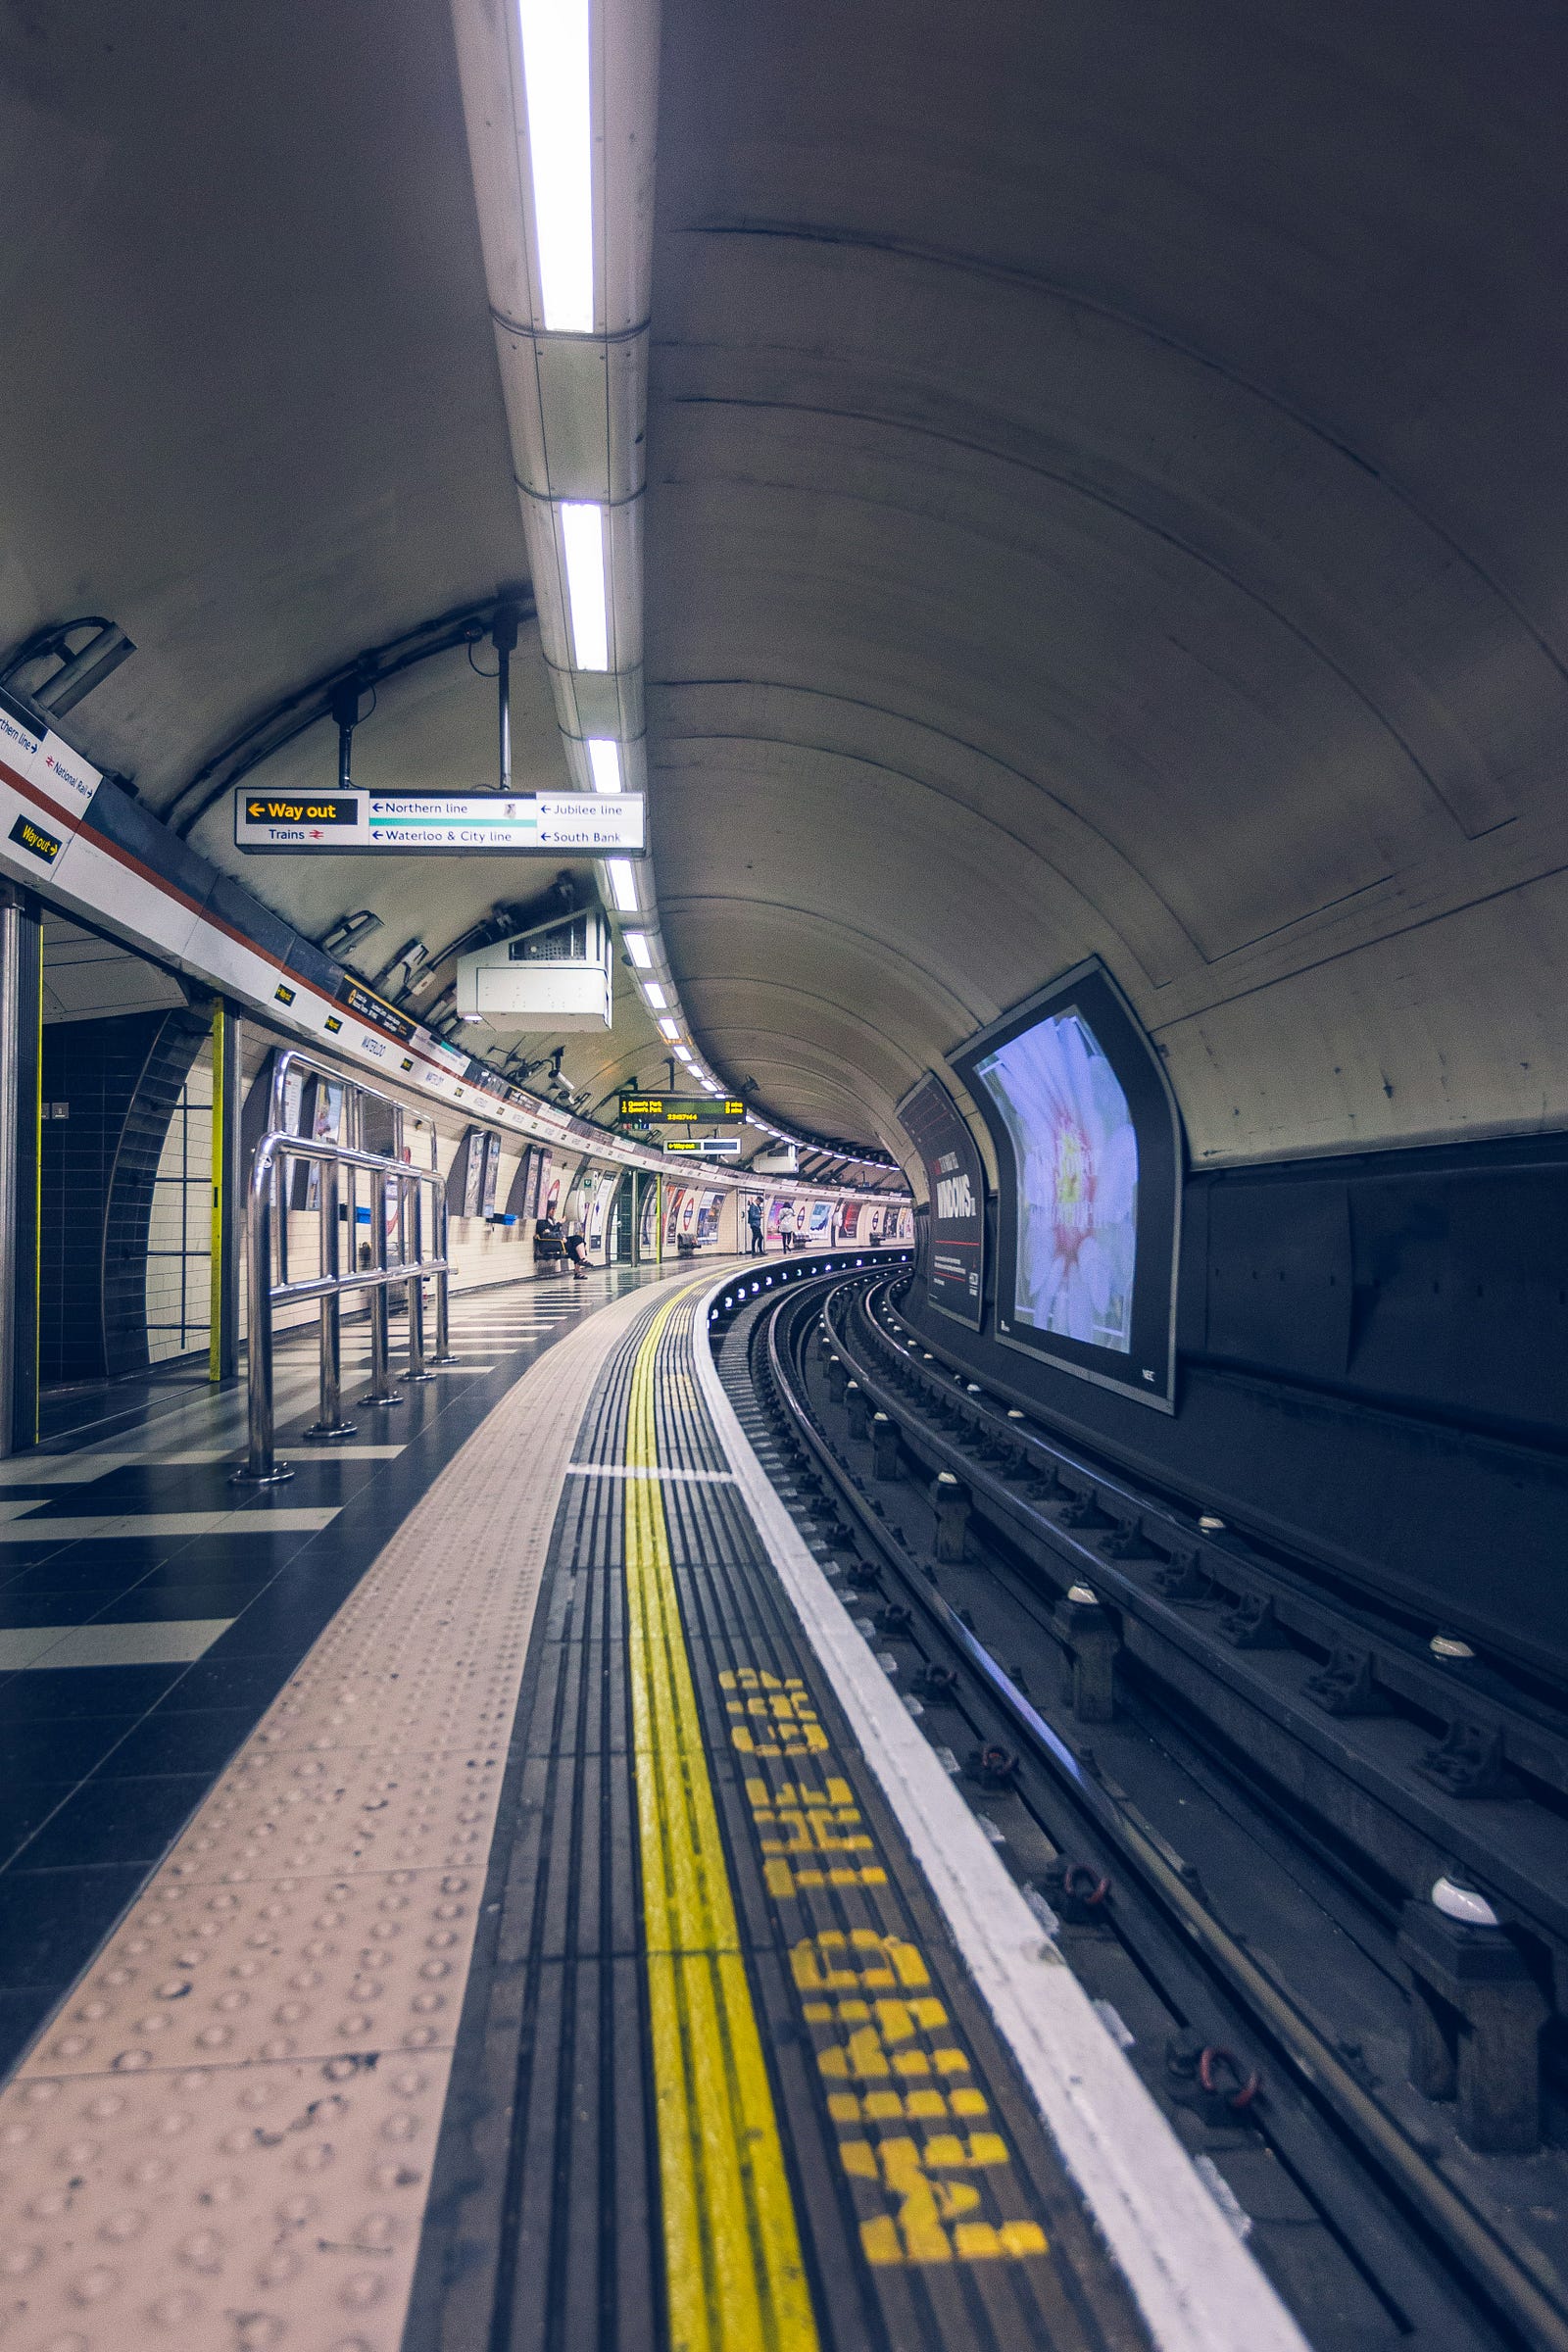 The London Tube.